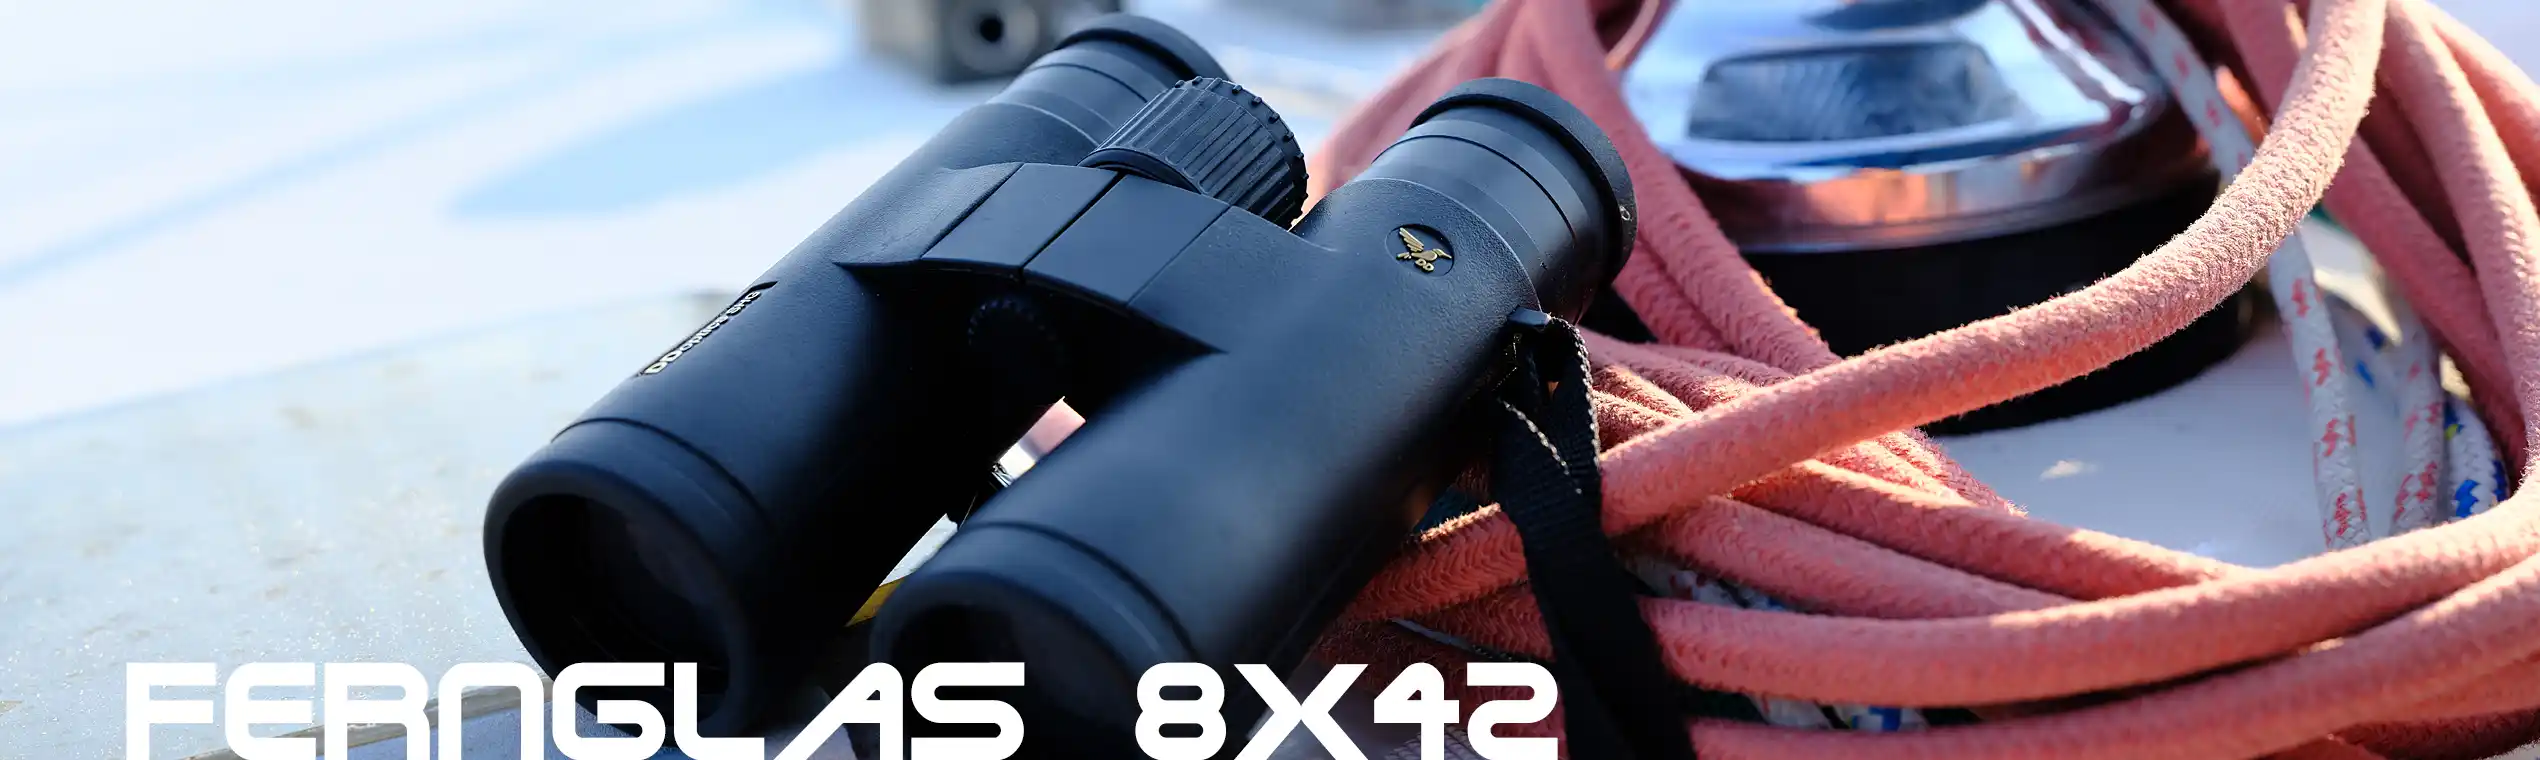 8x42 binoculars by DDoptics